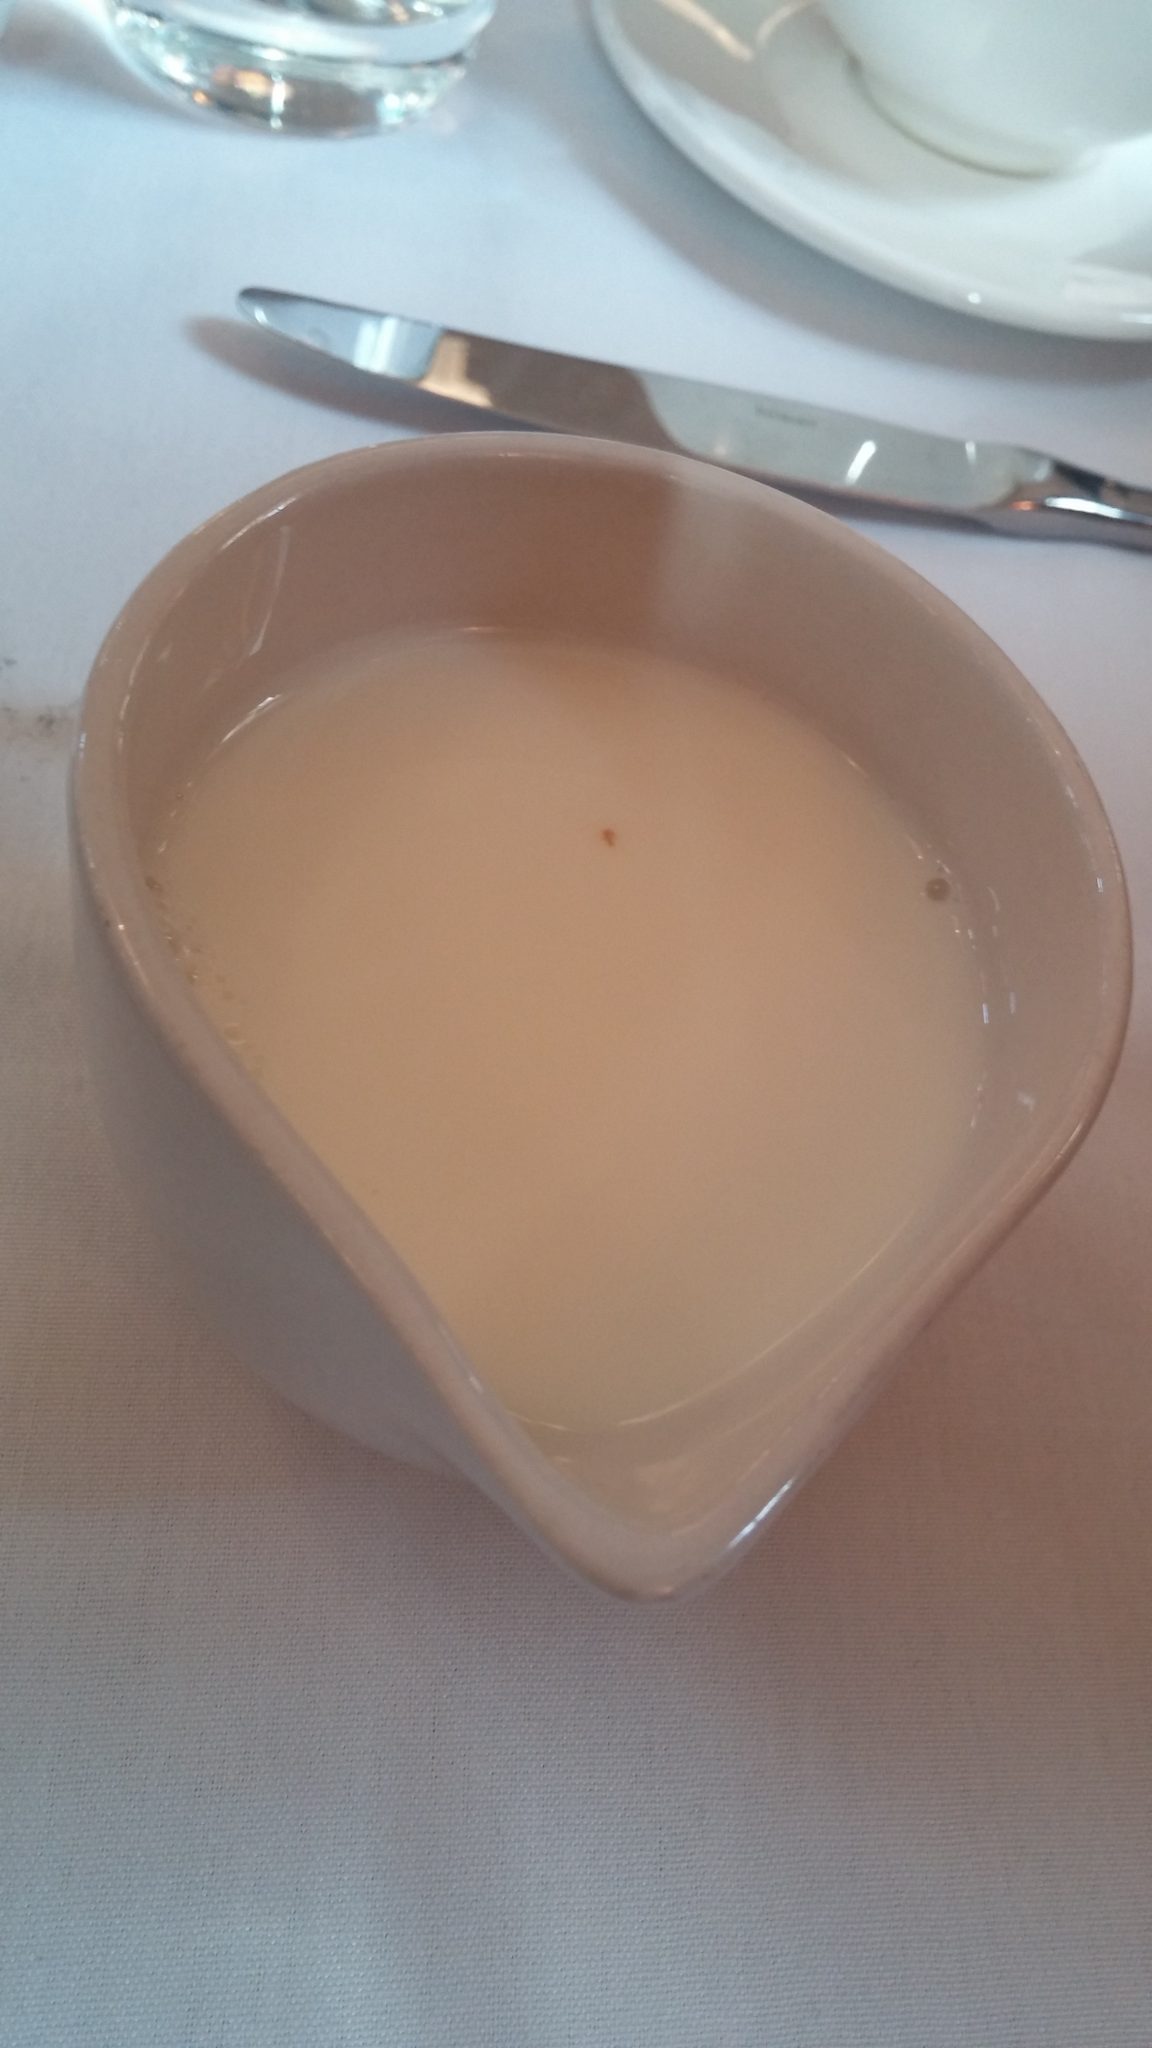 Milk jug with crumb in it